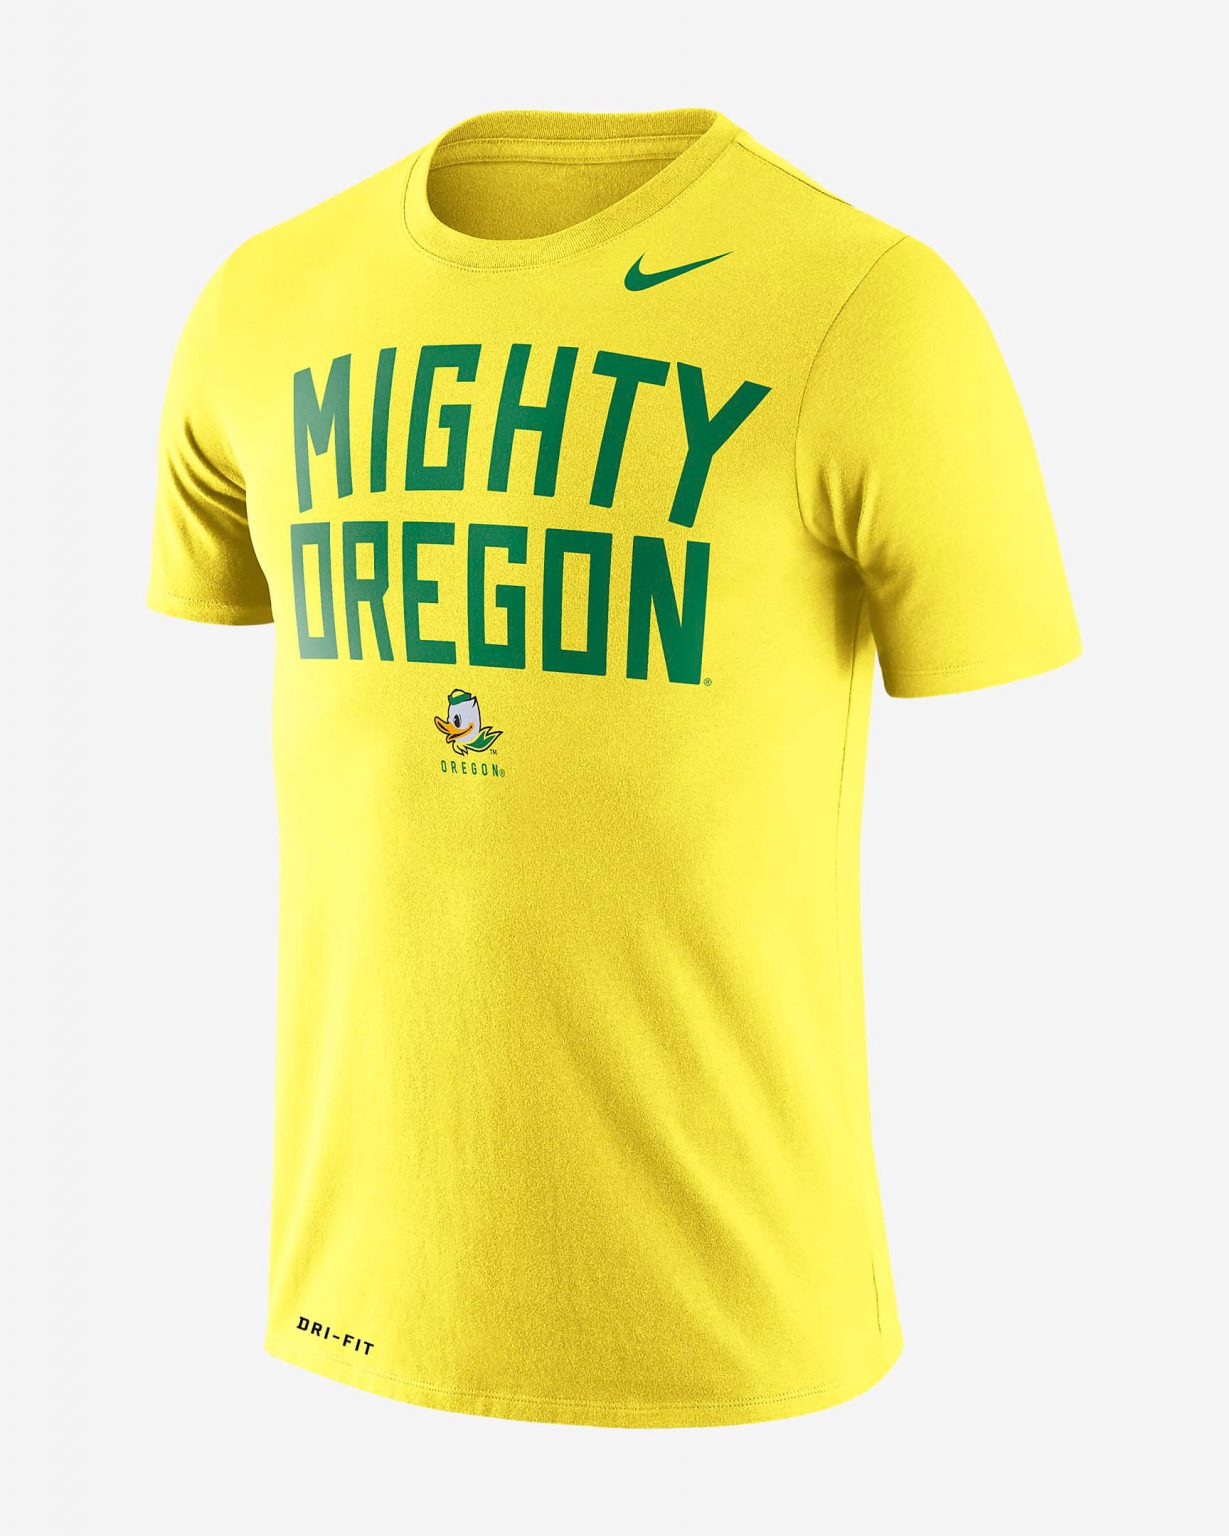 Jordan 5 Oregon Ducks Shirts Hats Clothing Match | SneakerFits.com